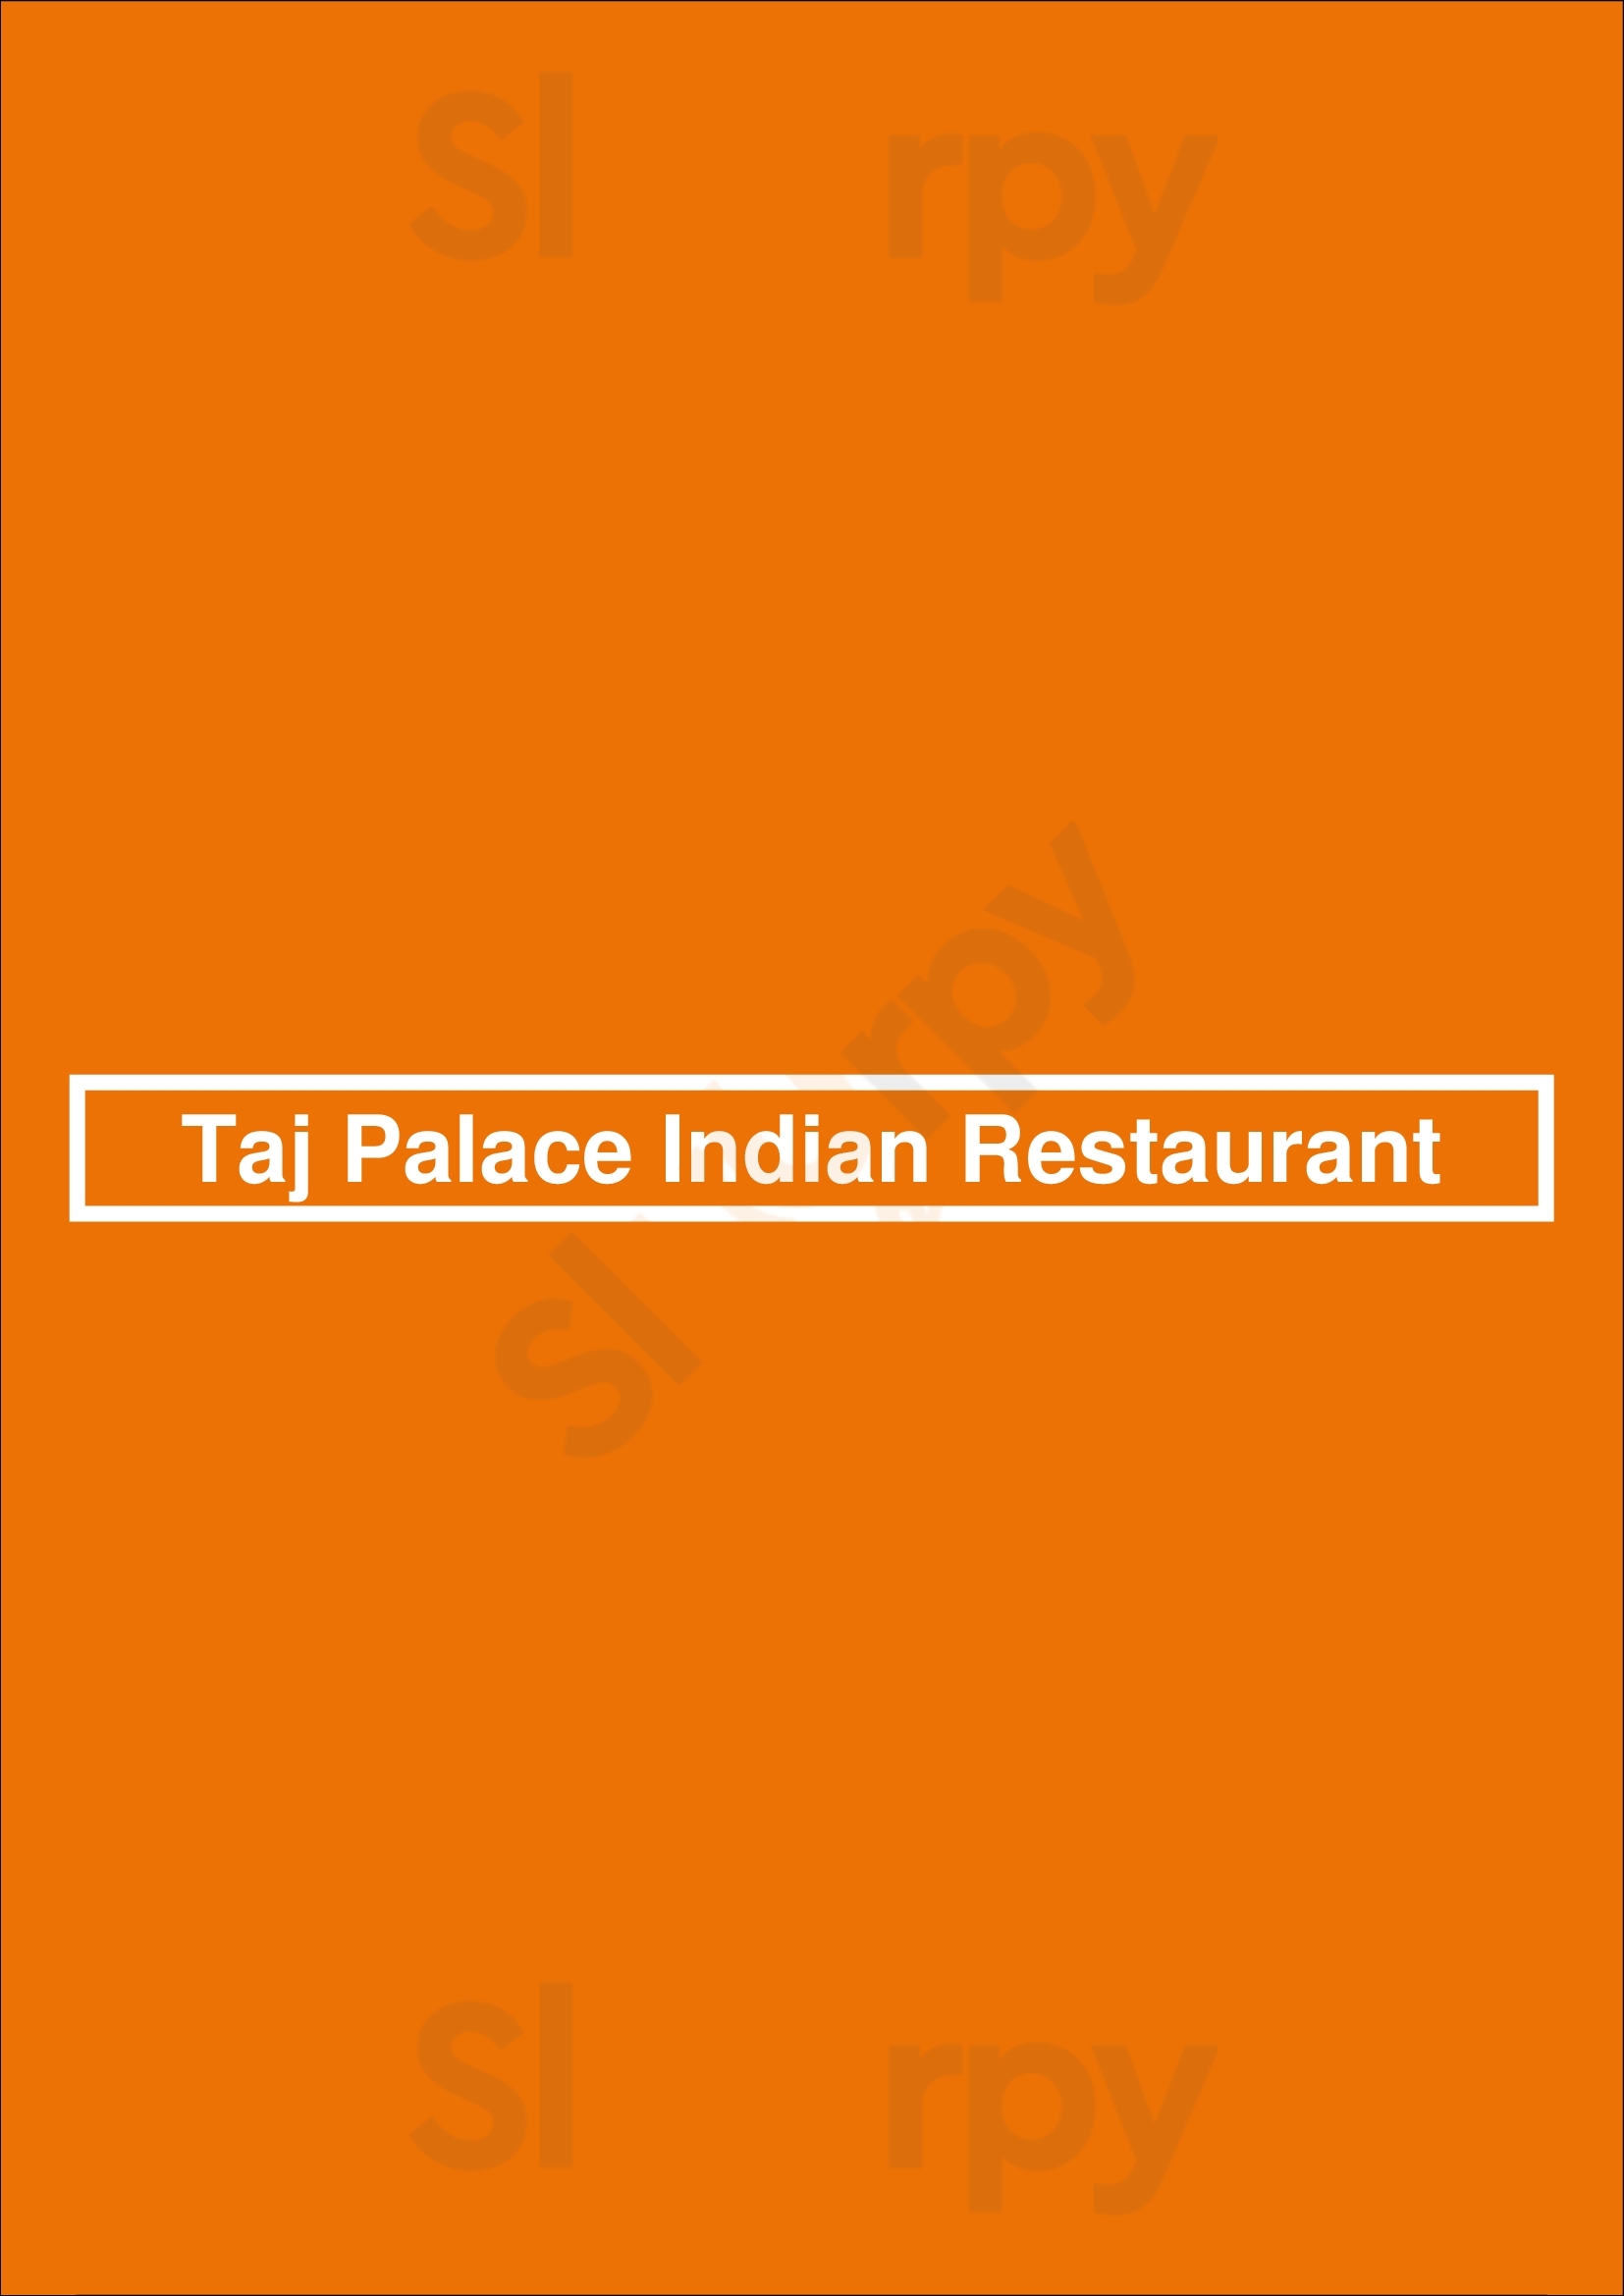 Taj Palace Indian Restaurant Louisville Menu - 1